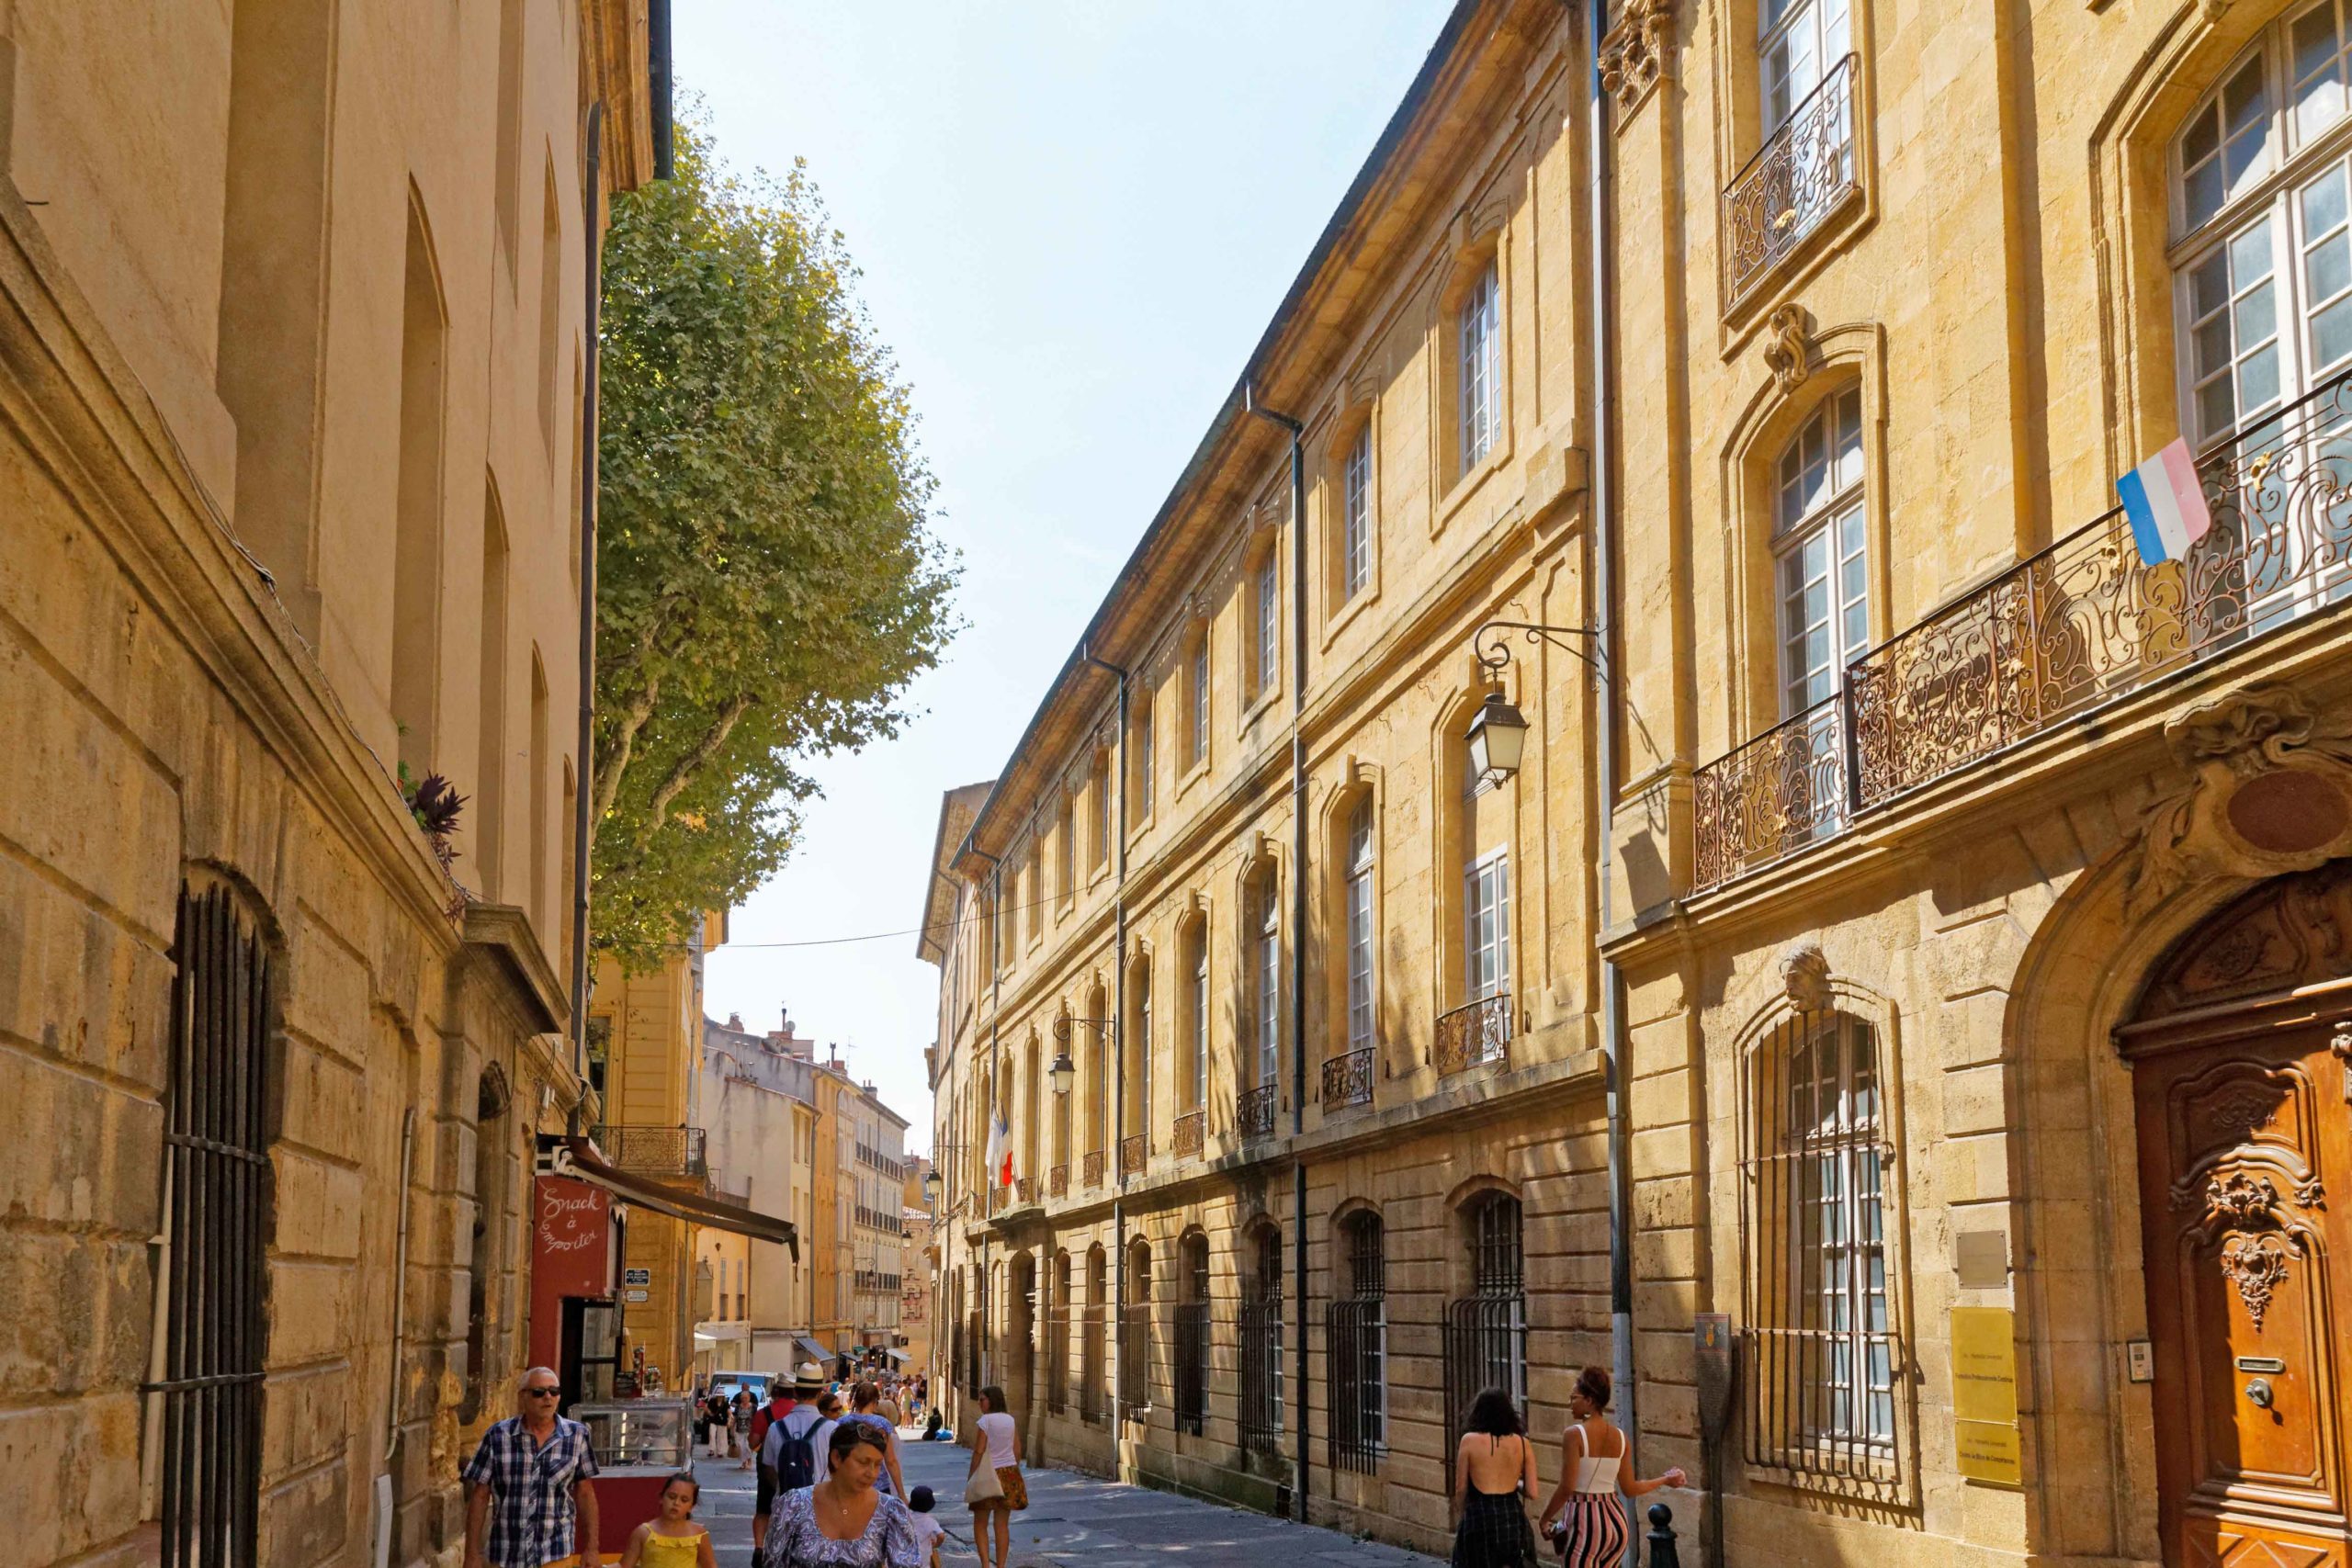 Aix-en-Provence Old Town: Hôtel Boyer de Fonscolombe © Bjs - licence [CC BY-SA 4.0] from Wikimedia Commons